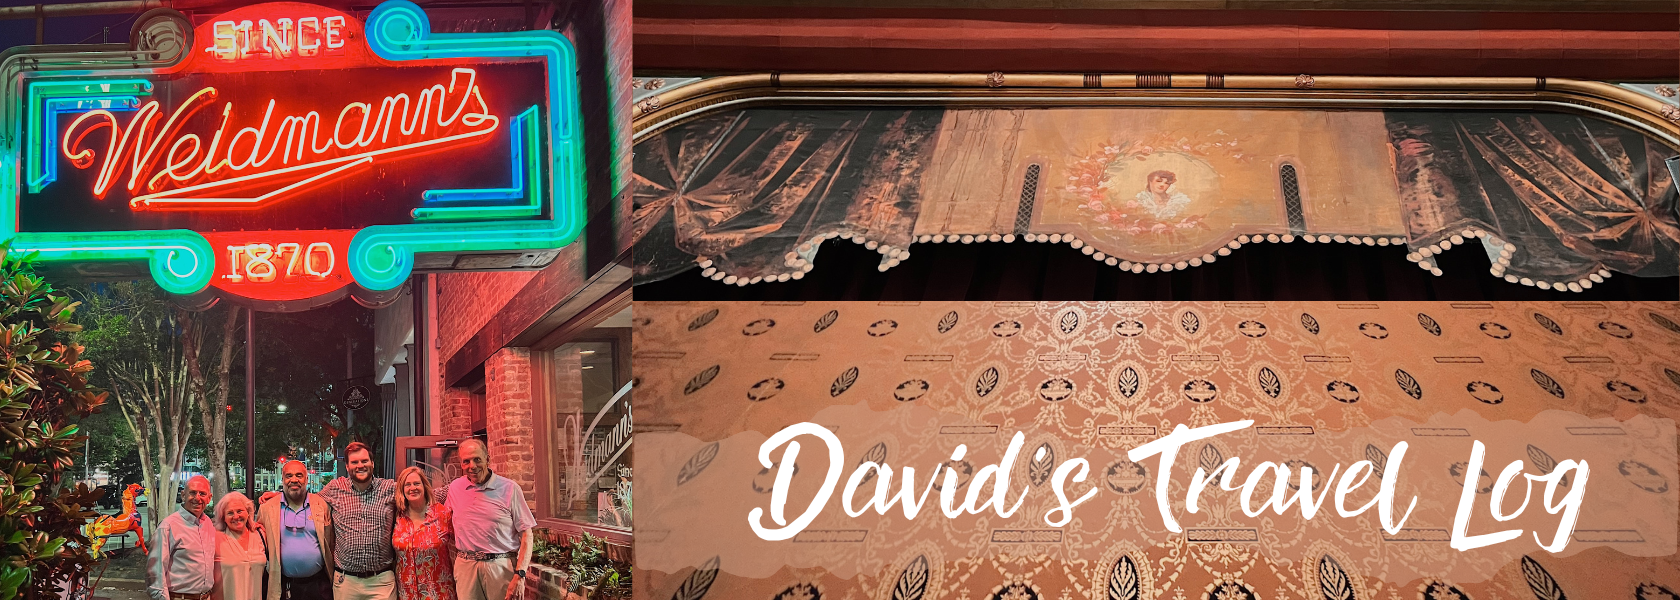 David's Travel Log - Meridian